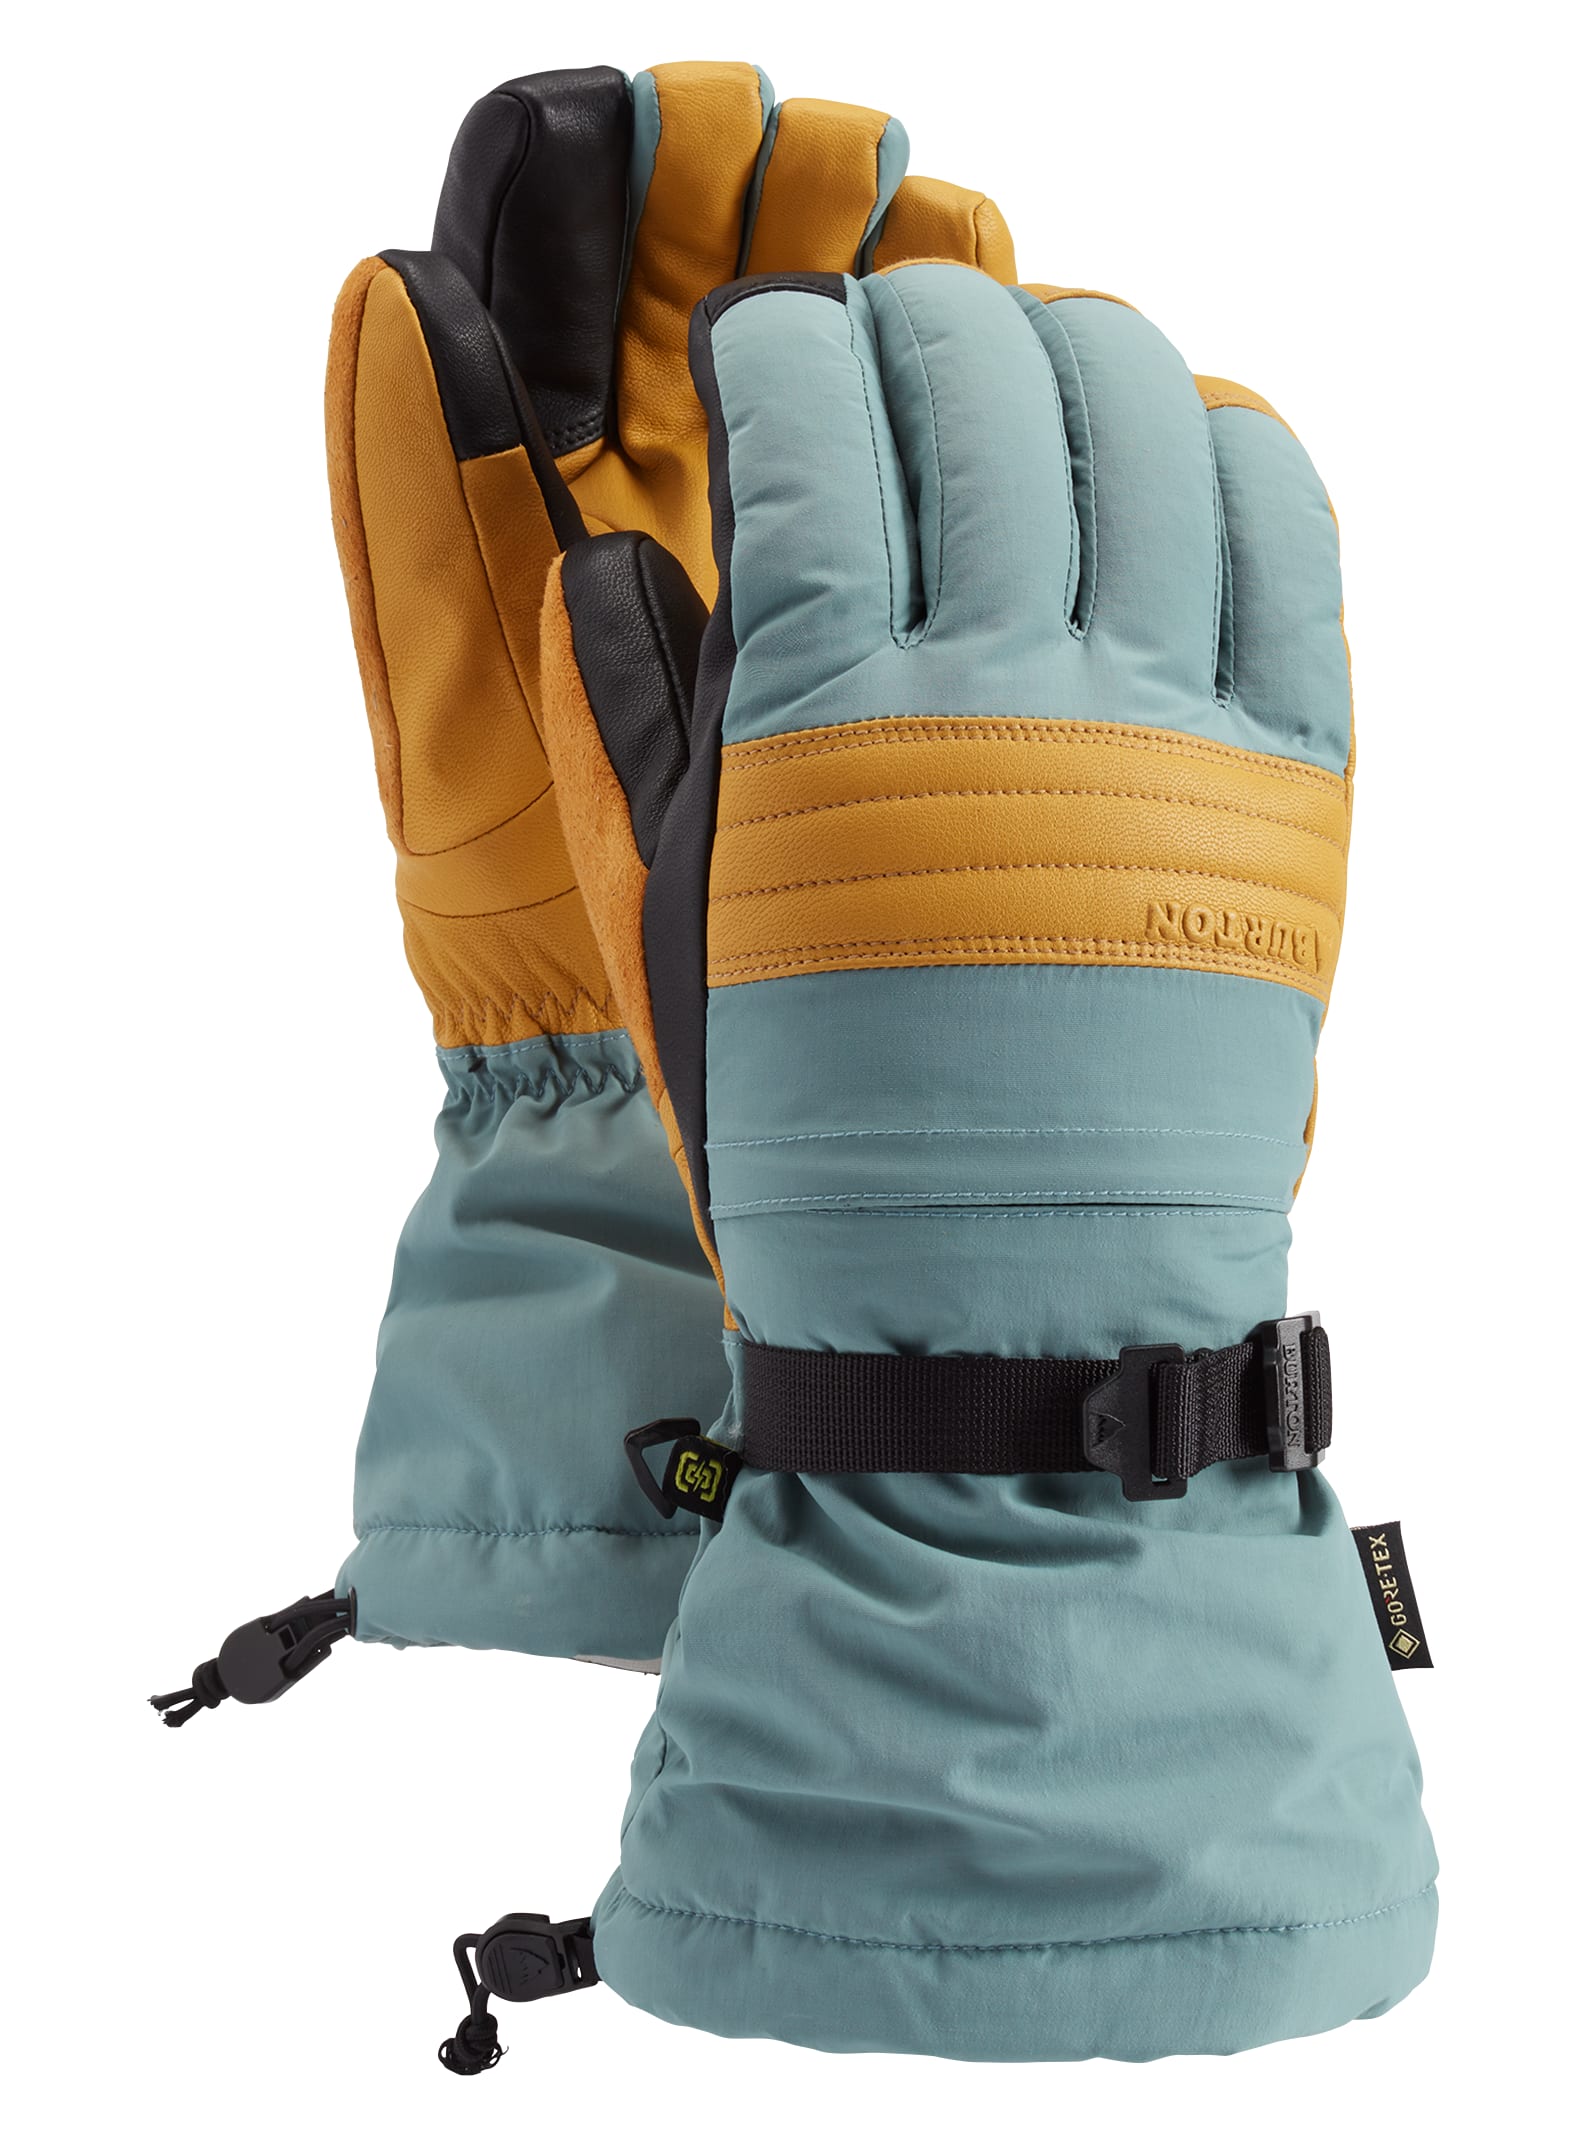 Men's Burton GORE-TEX Warmest Glove | Burton.com Winter 2021 US